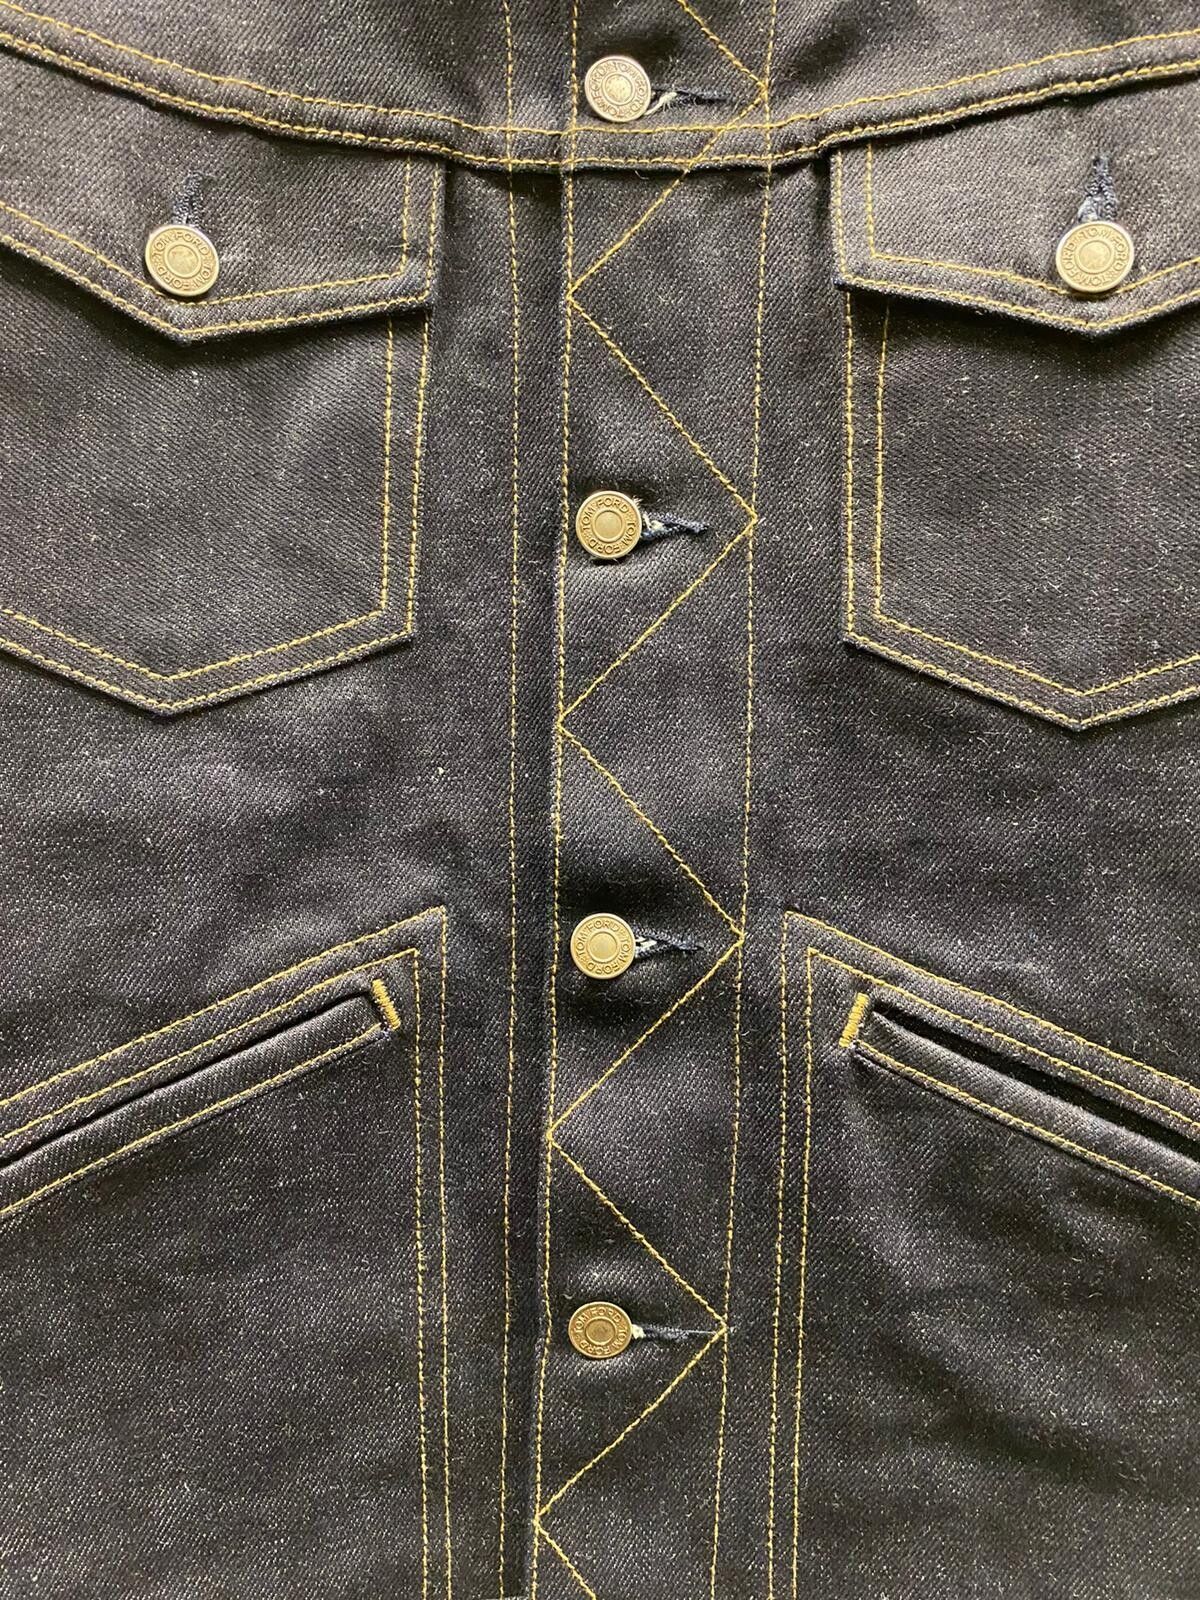 Tom Ford Classic Denim Jacket in Indigo Size US M / EU 48-50 / 2 - 4 Thumbnail